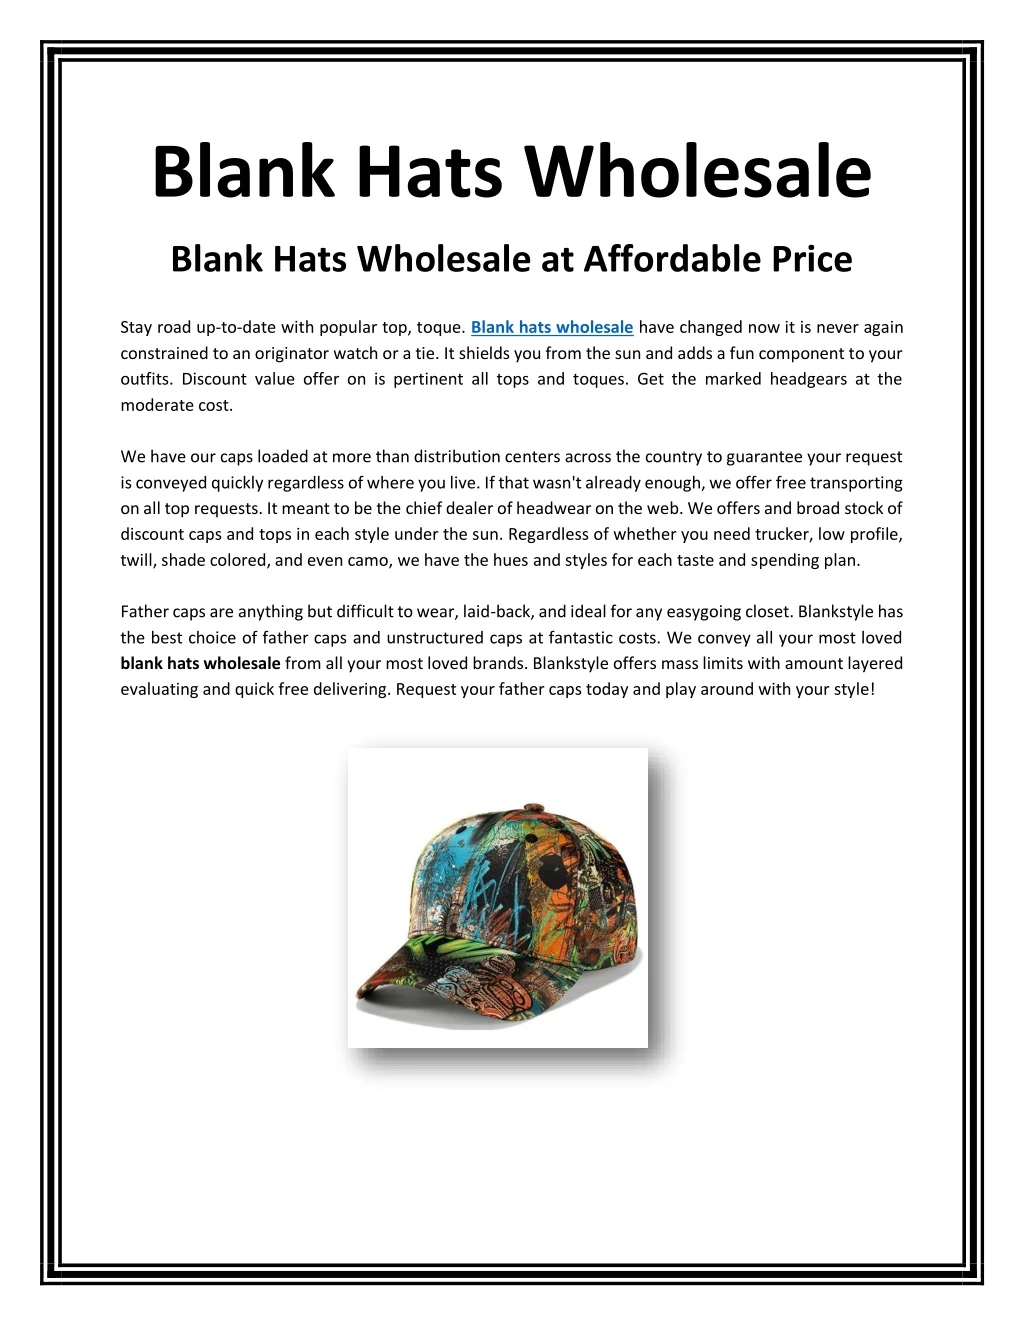 blank hats wholesale